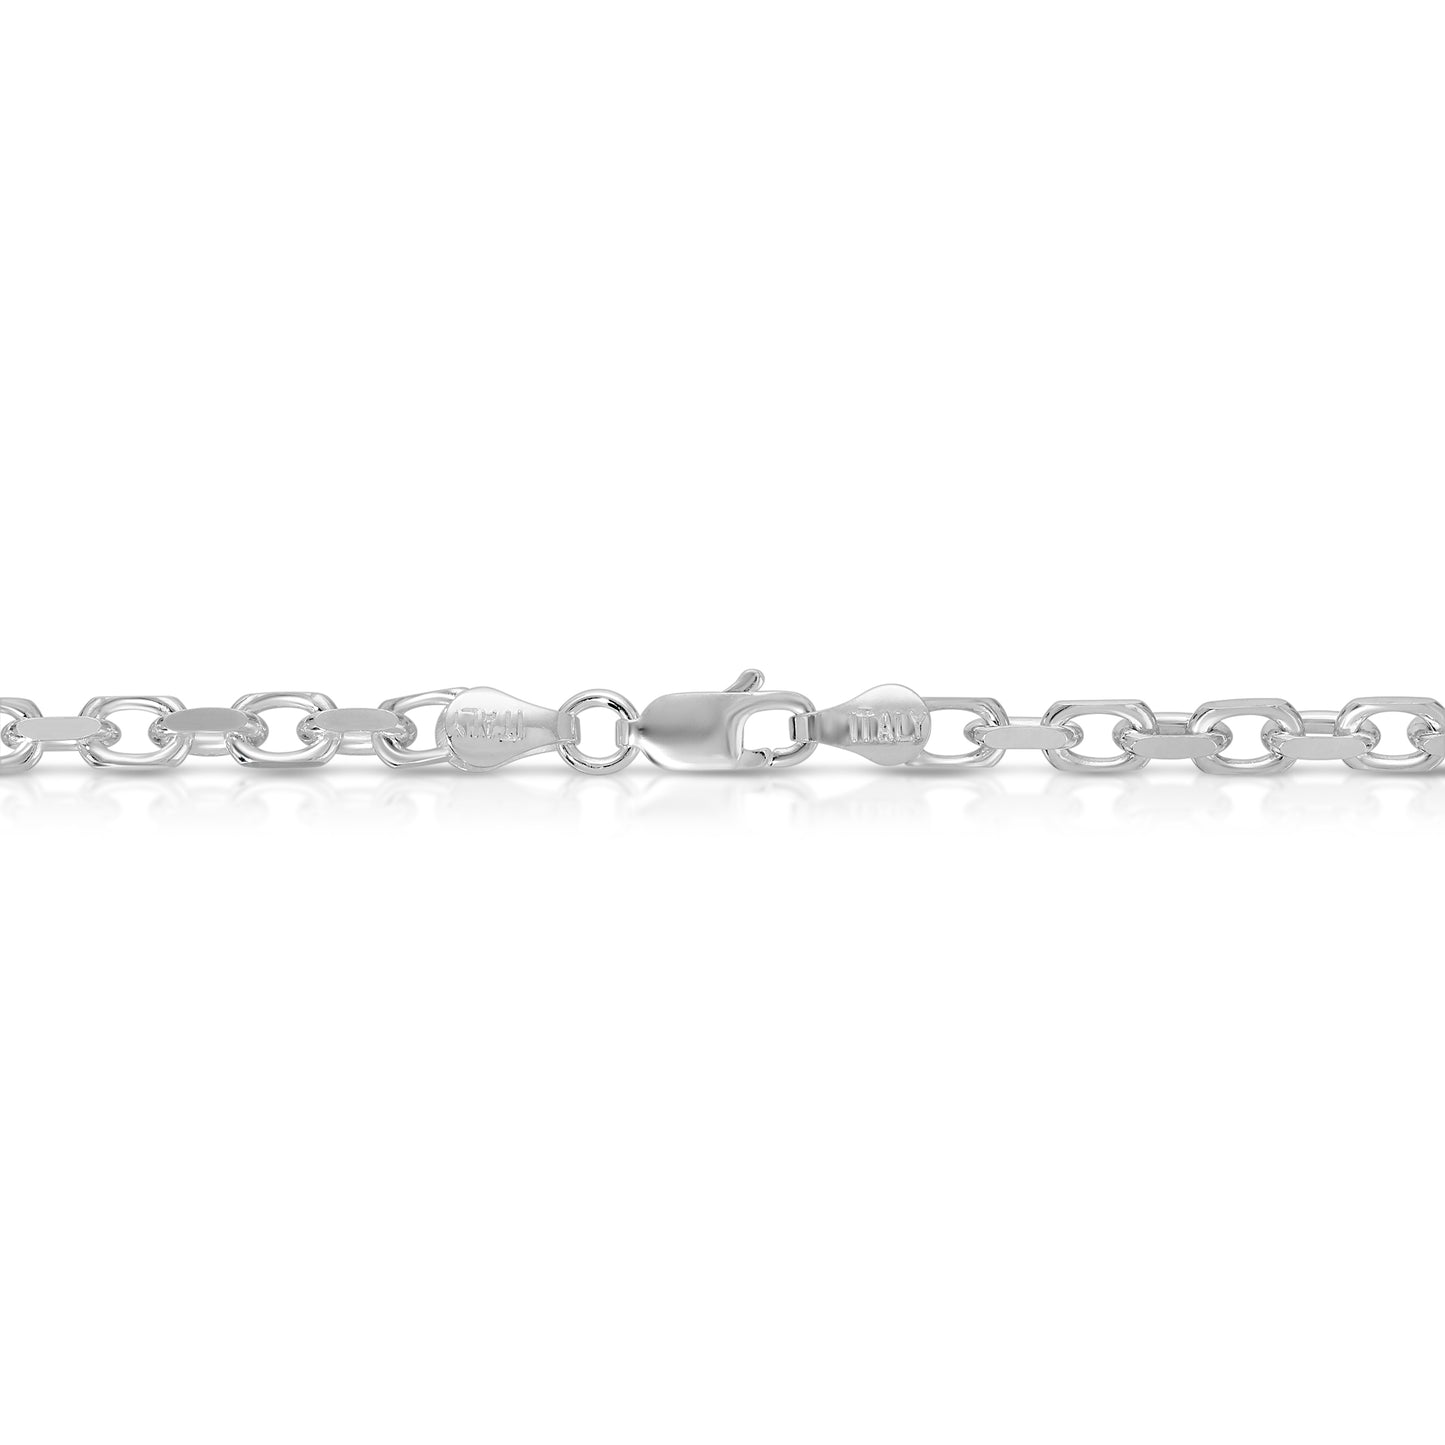 3.5mm Forzentina Link Chain